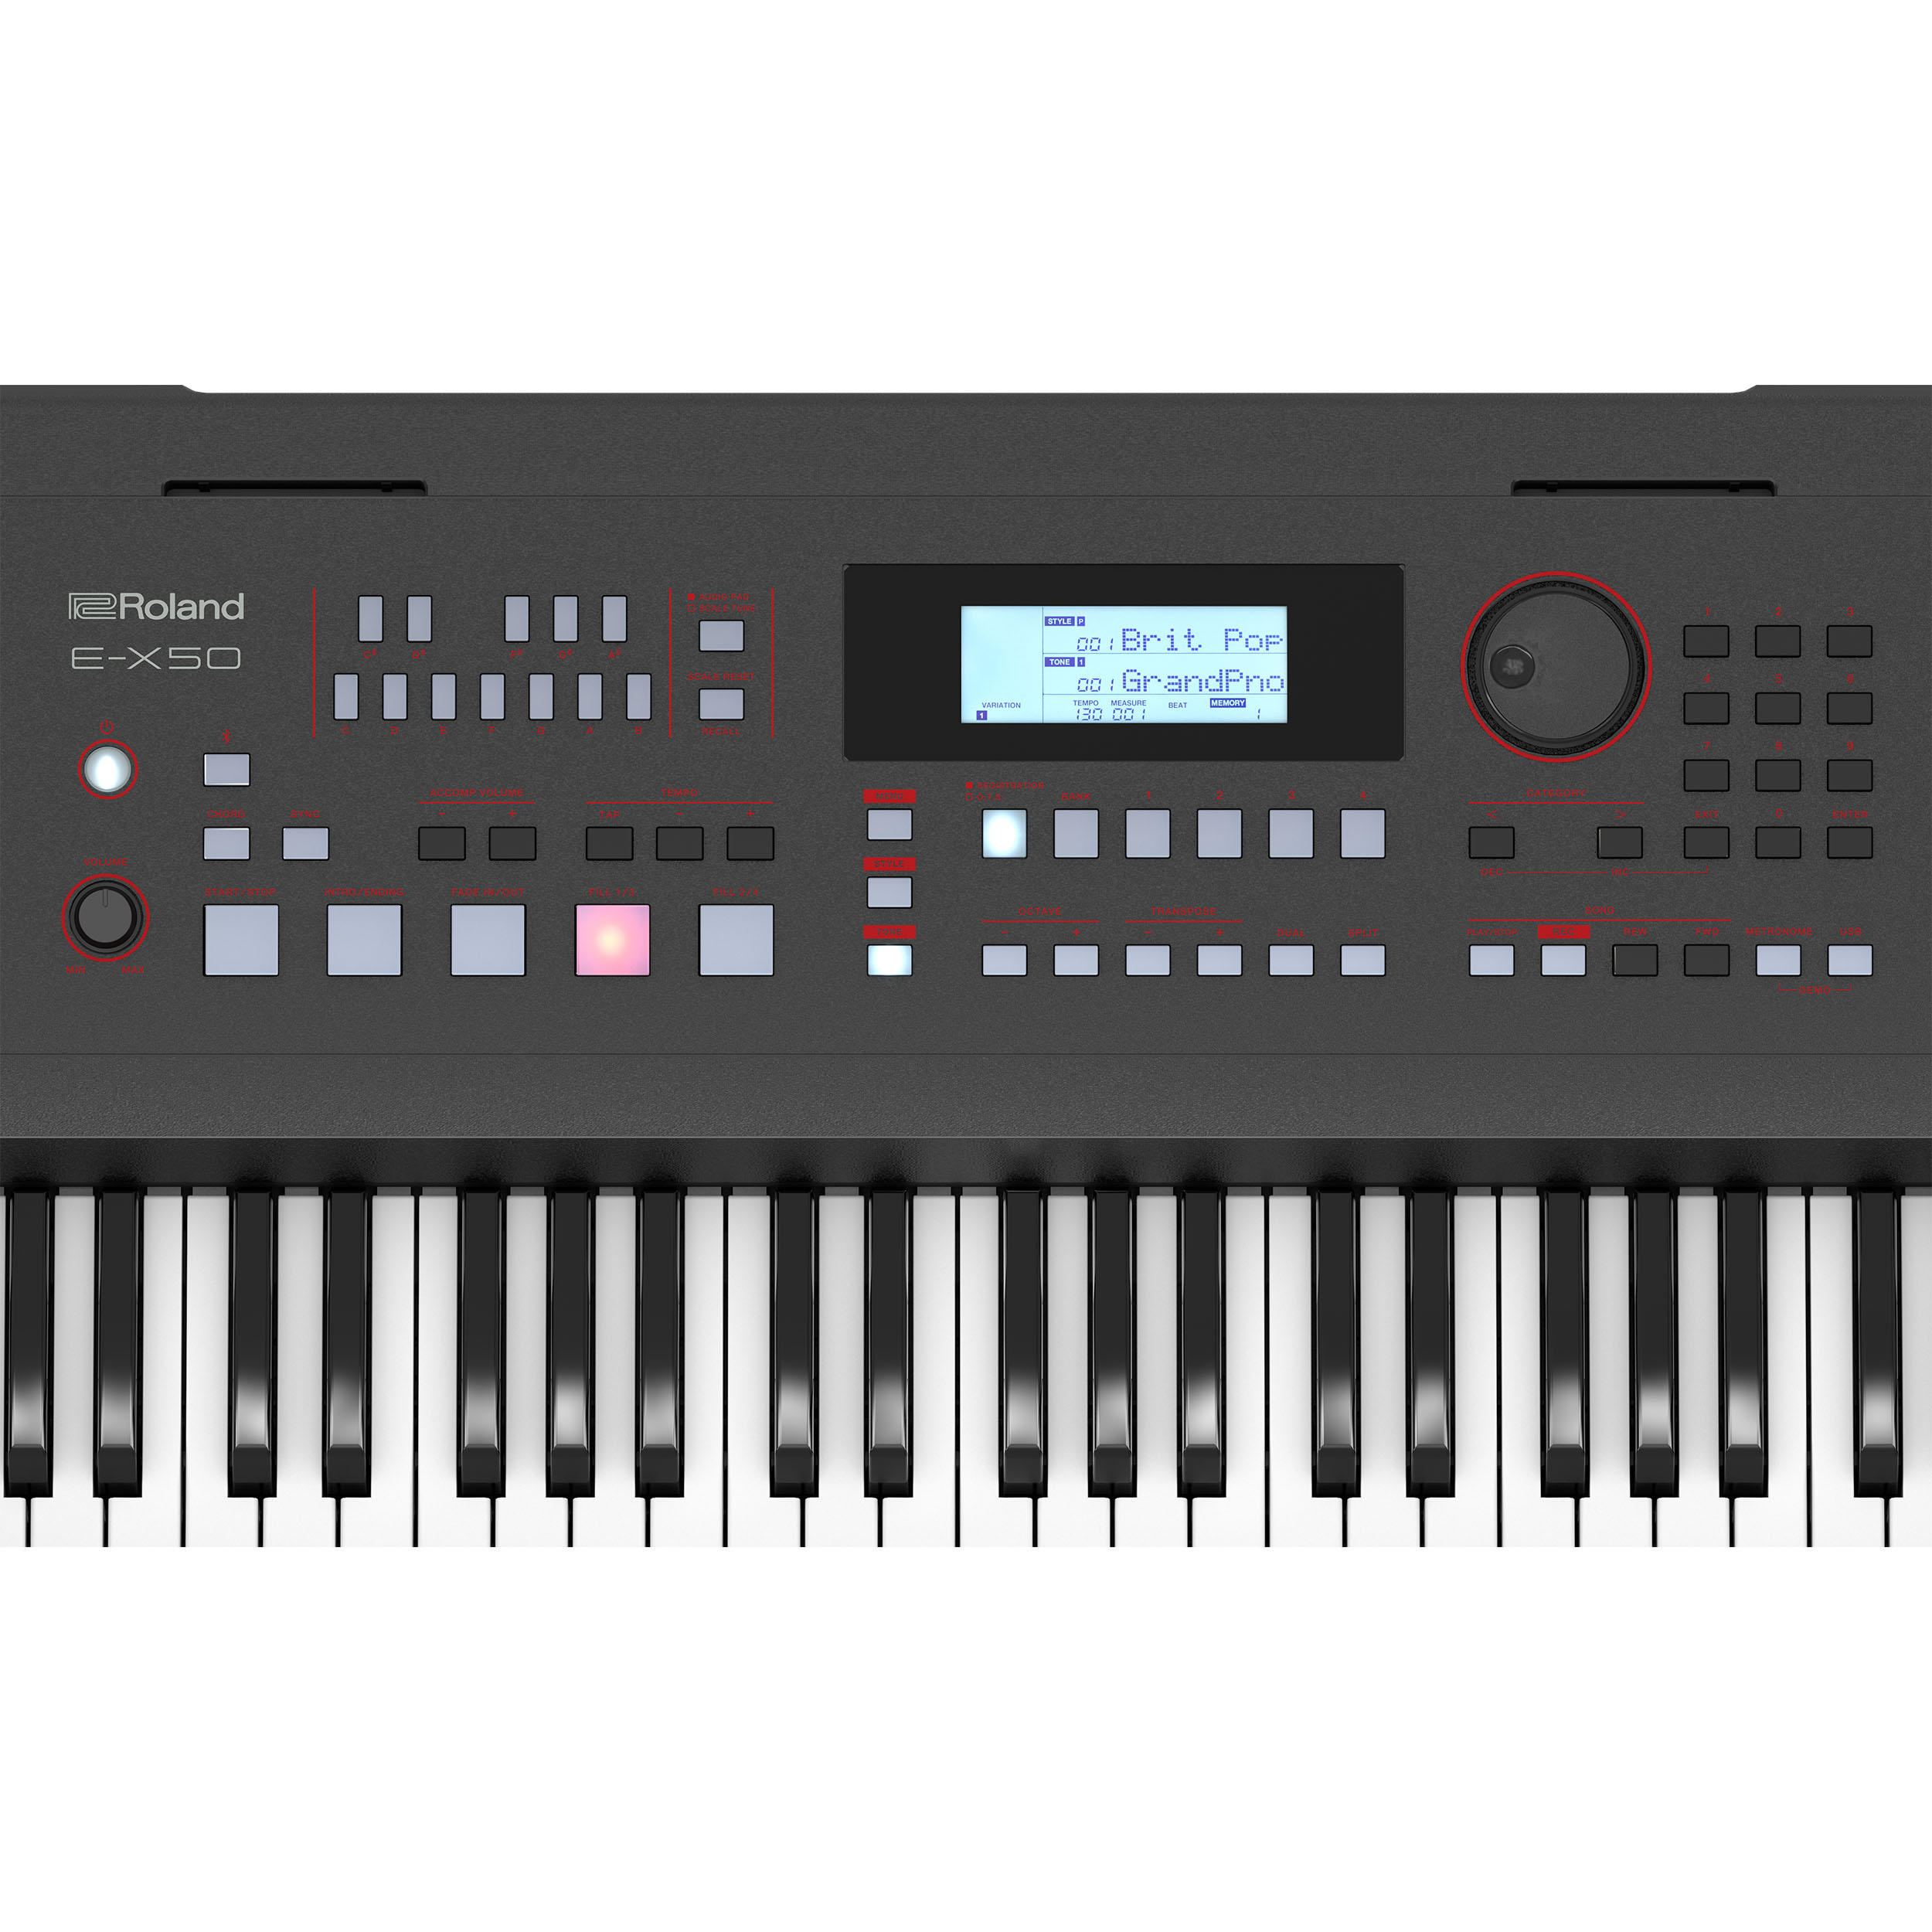 E-X50 Entertainer Keyboard